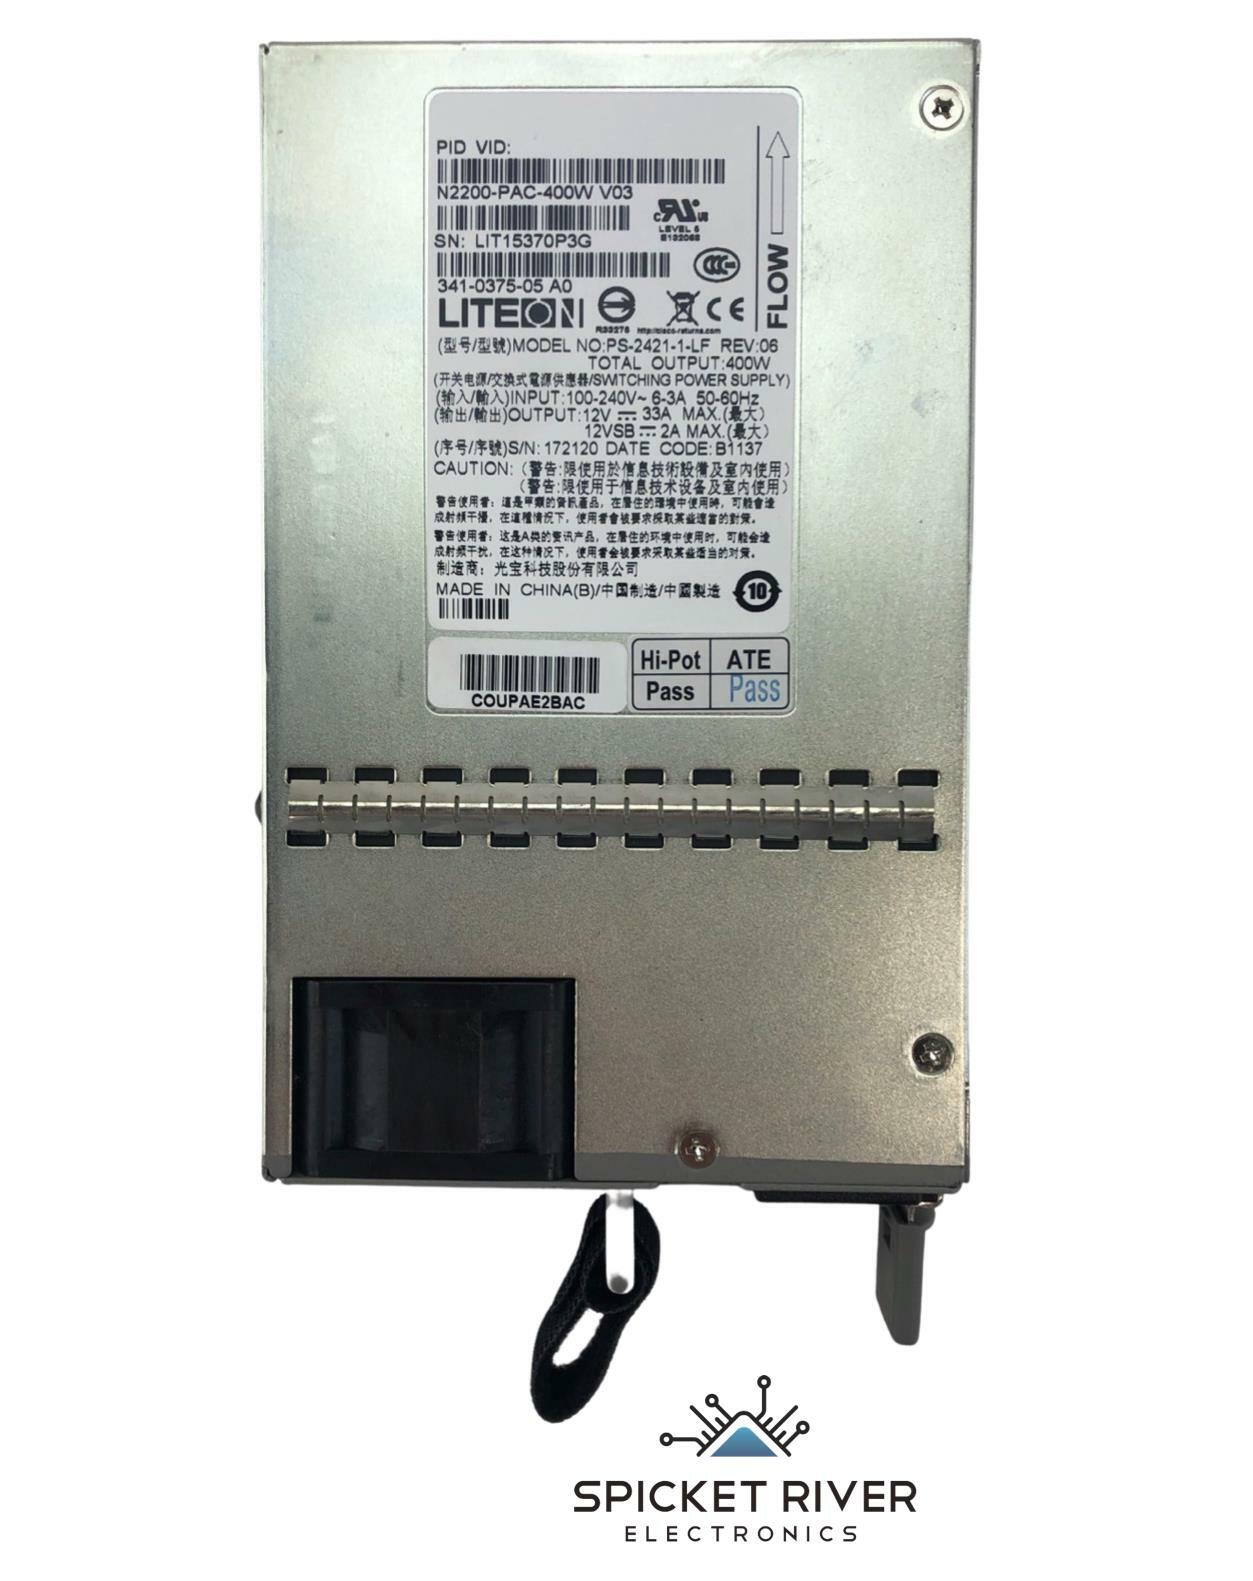 LiteOn PS-2421-1-LF REV 06 400W Switch Power Supply 341-0375-05